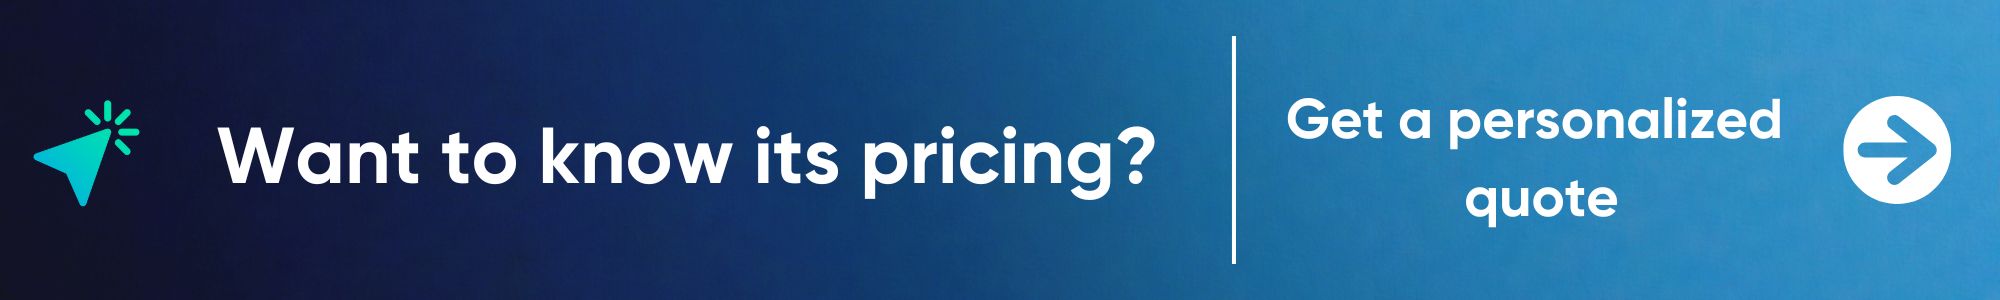 Pricing CTA